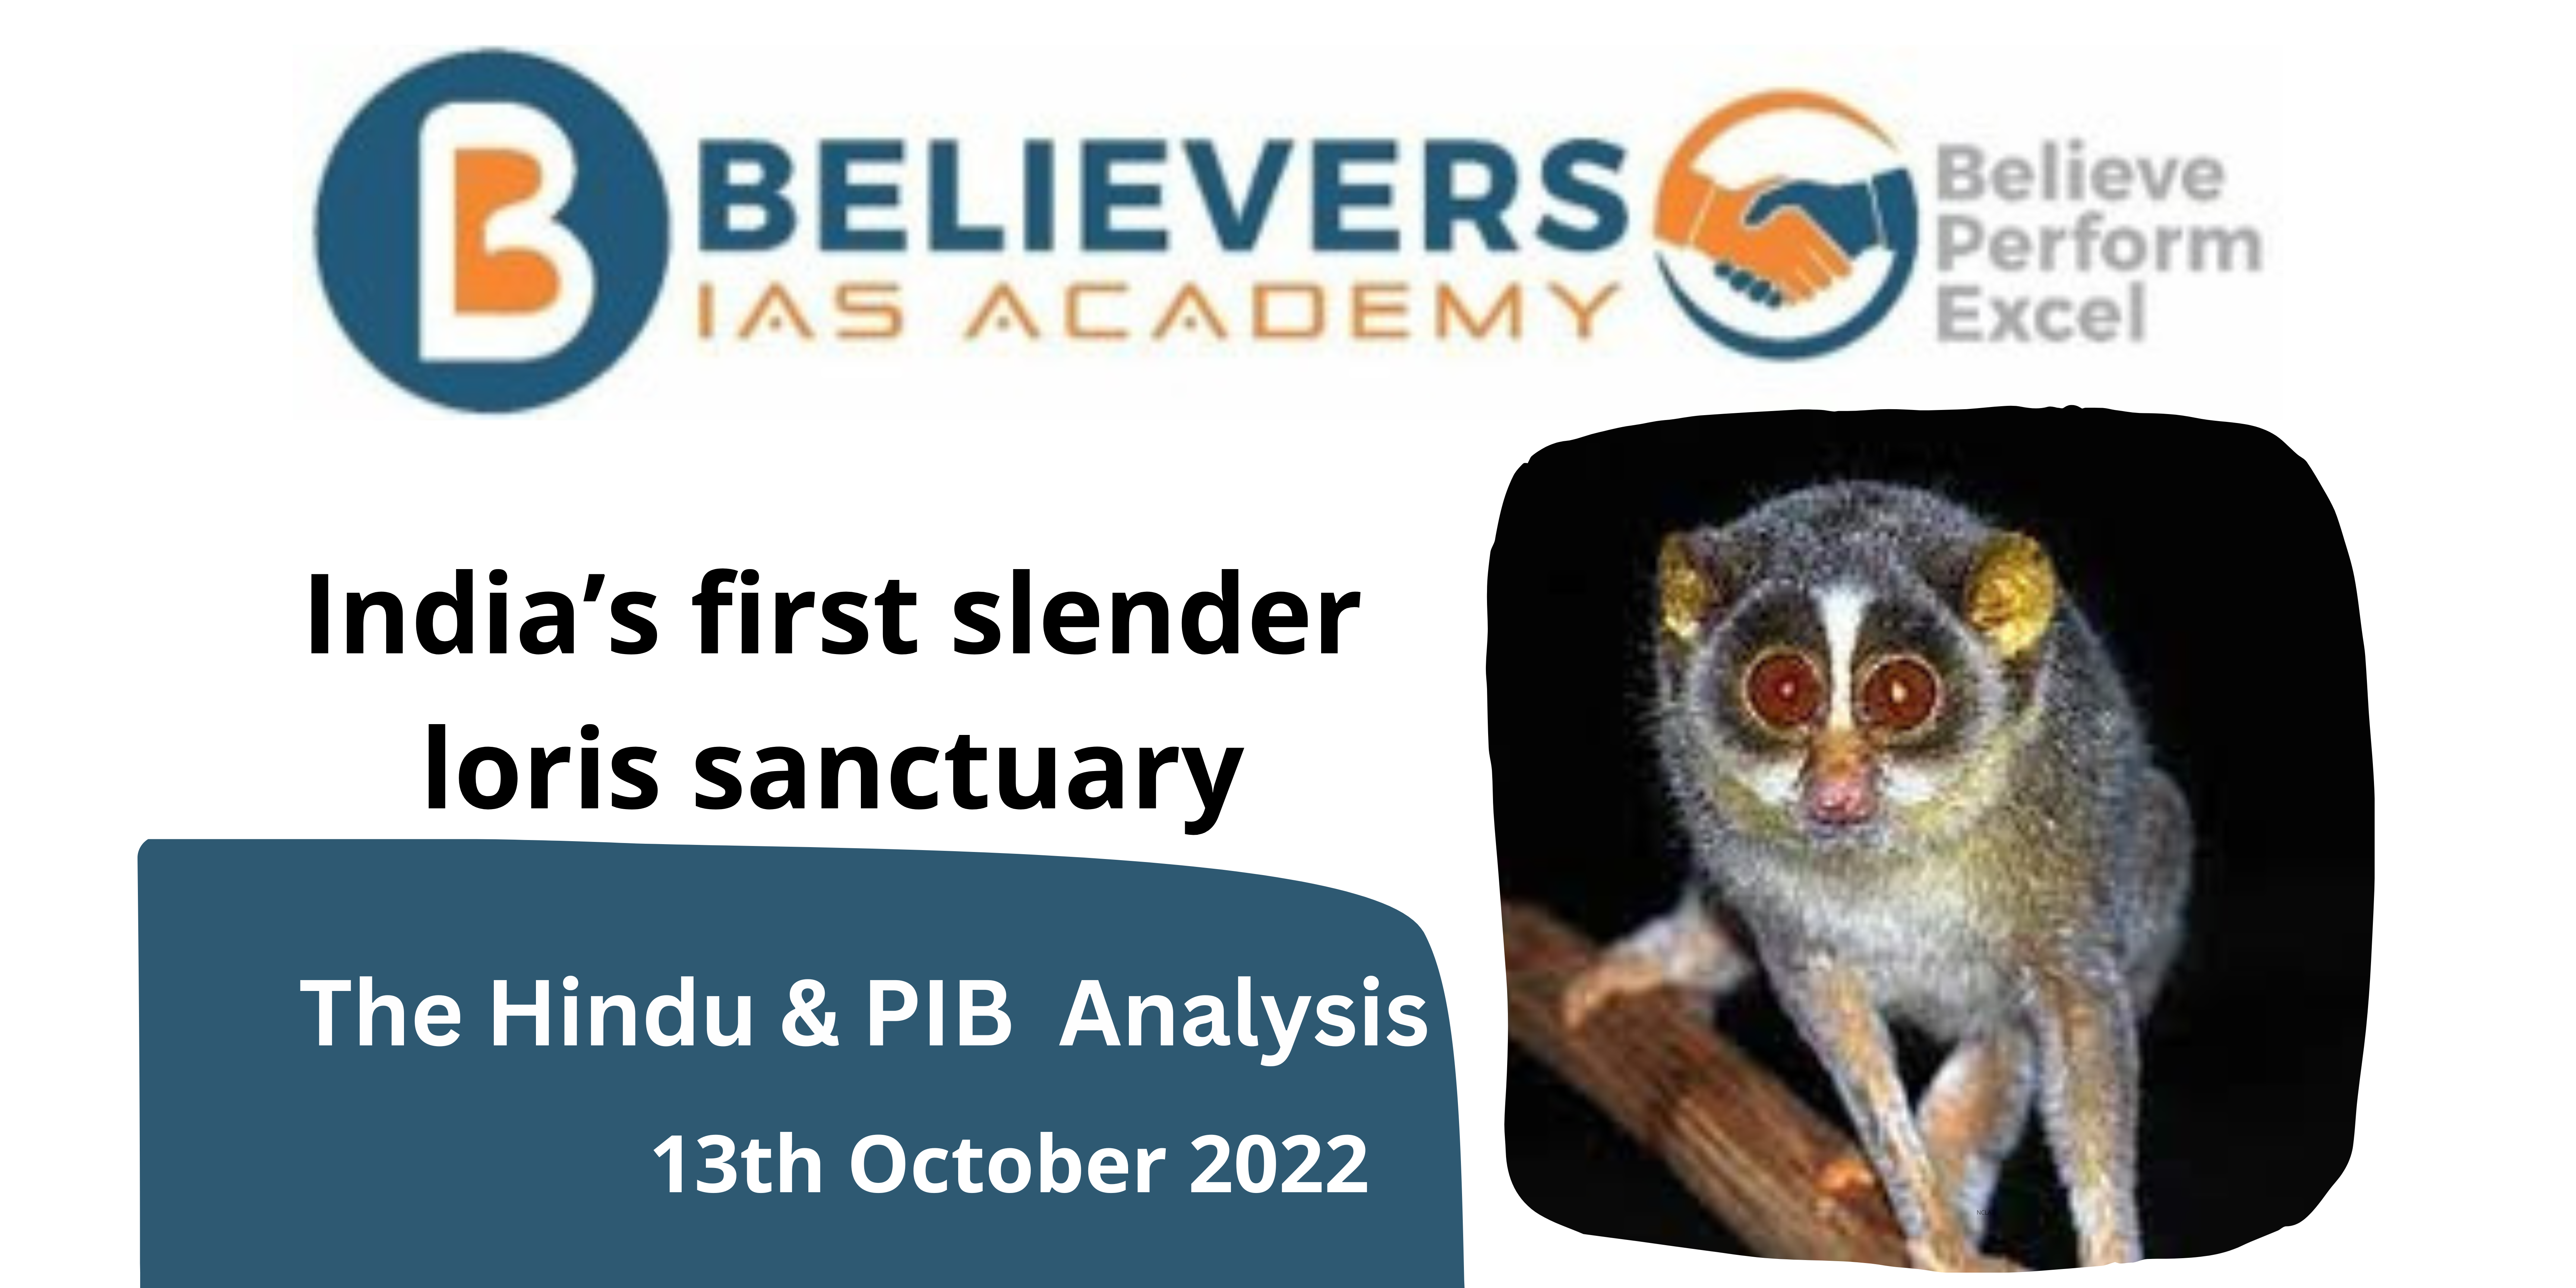 India’s first slender loris sanctuary